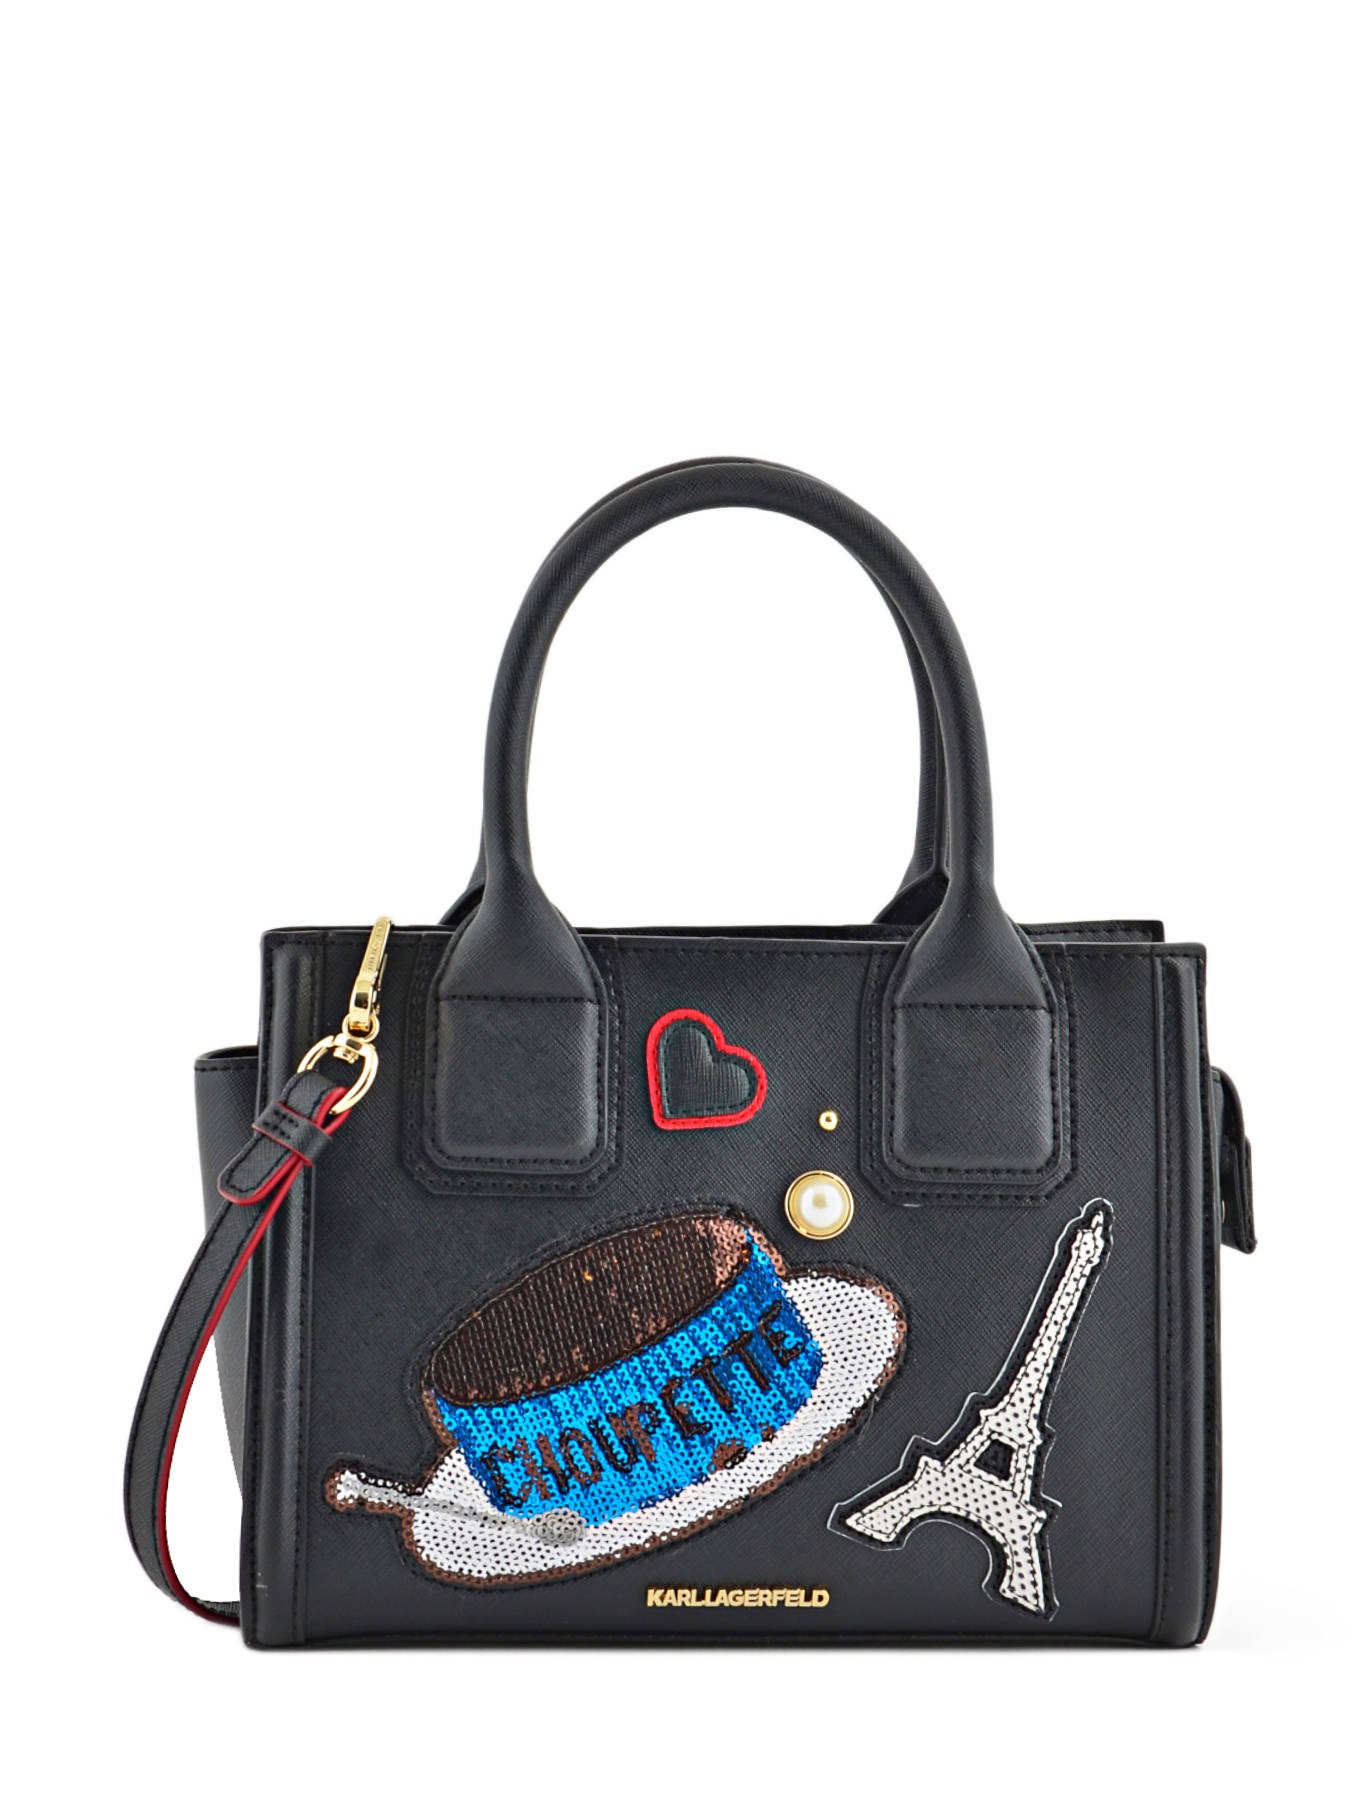 Karl Lagerfeld Paris Handbags | SEMA Data Co-op